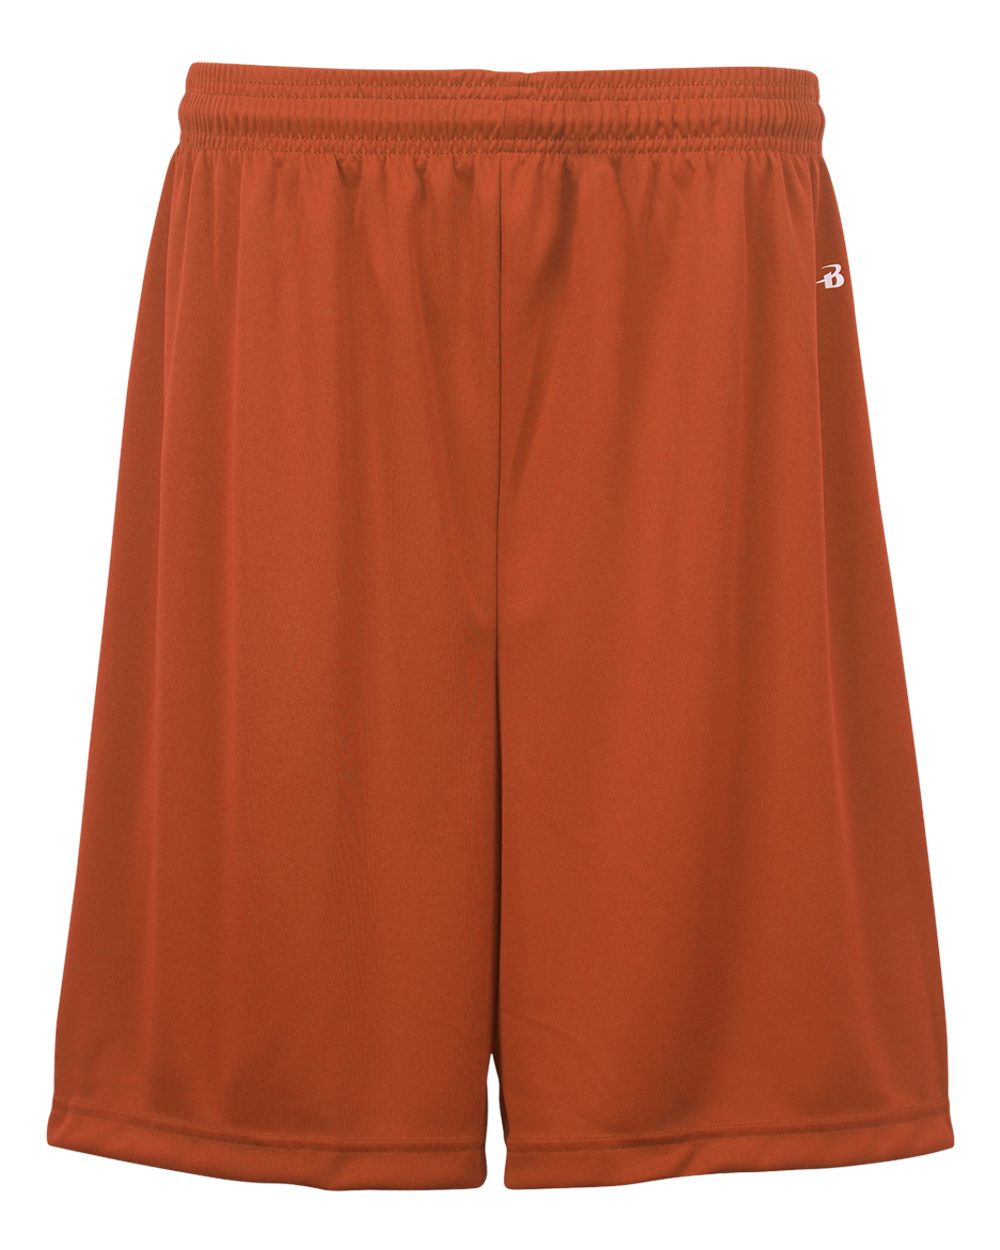 4107 Badger Adult B-Core 7 Performance Shorts-Safety Orange